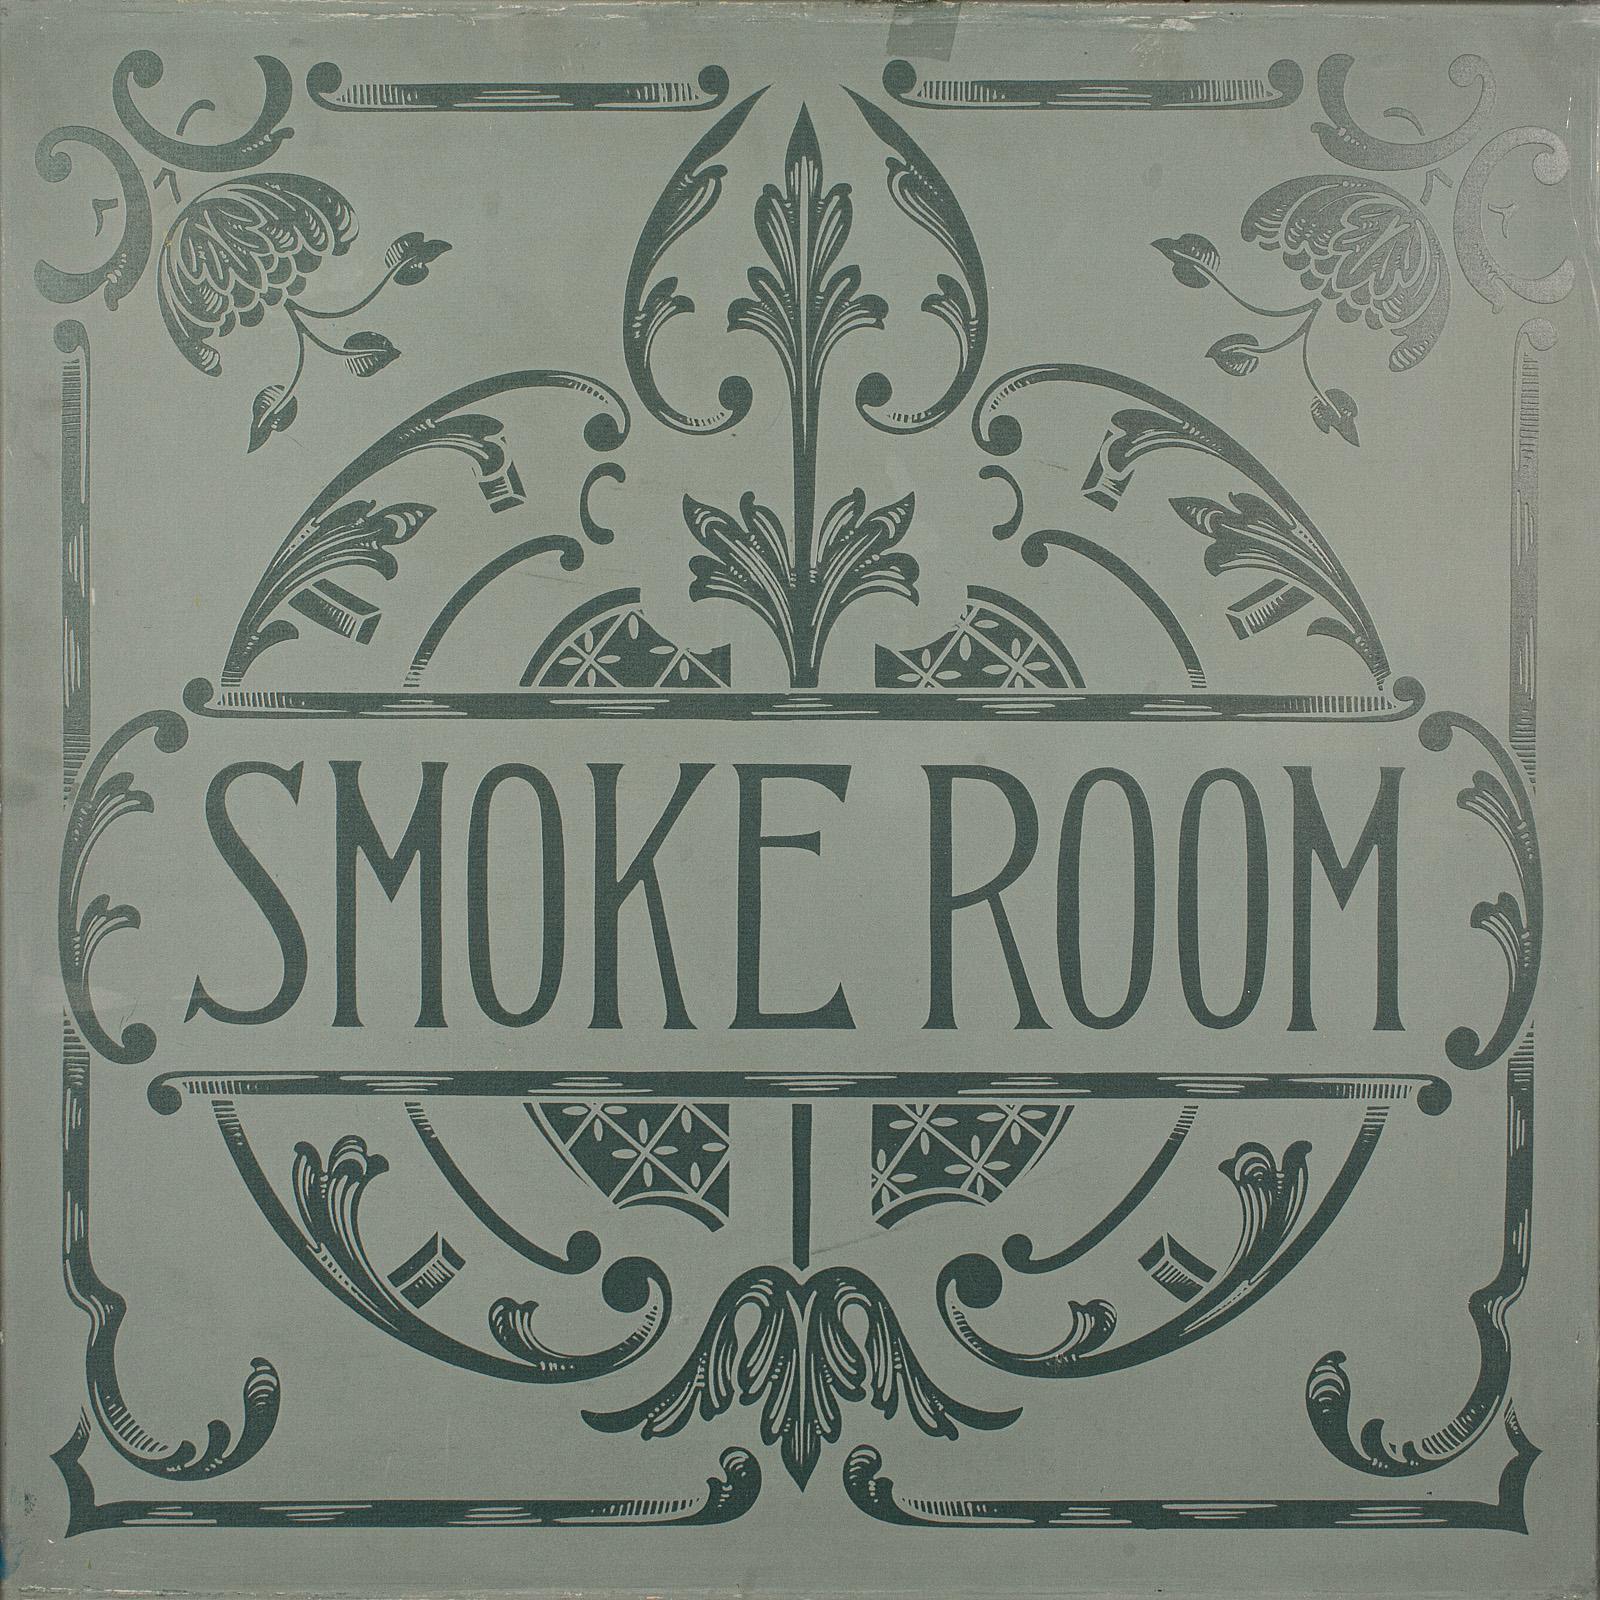 British Antique Ship's Smoke Room Sign, English, Leather Frame, Decorative, Victorian